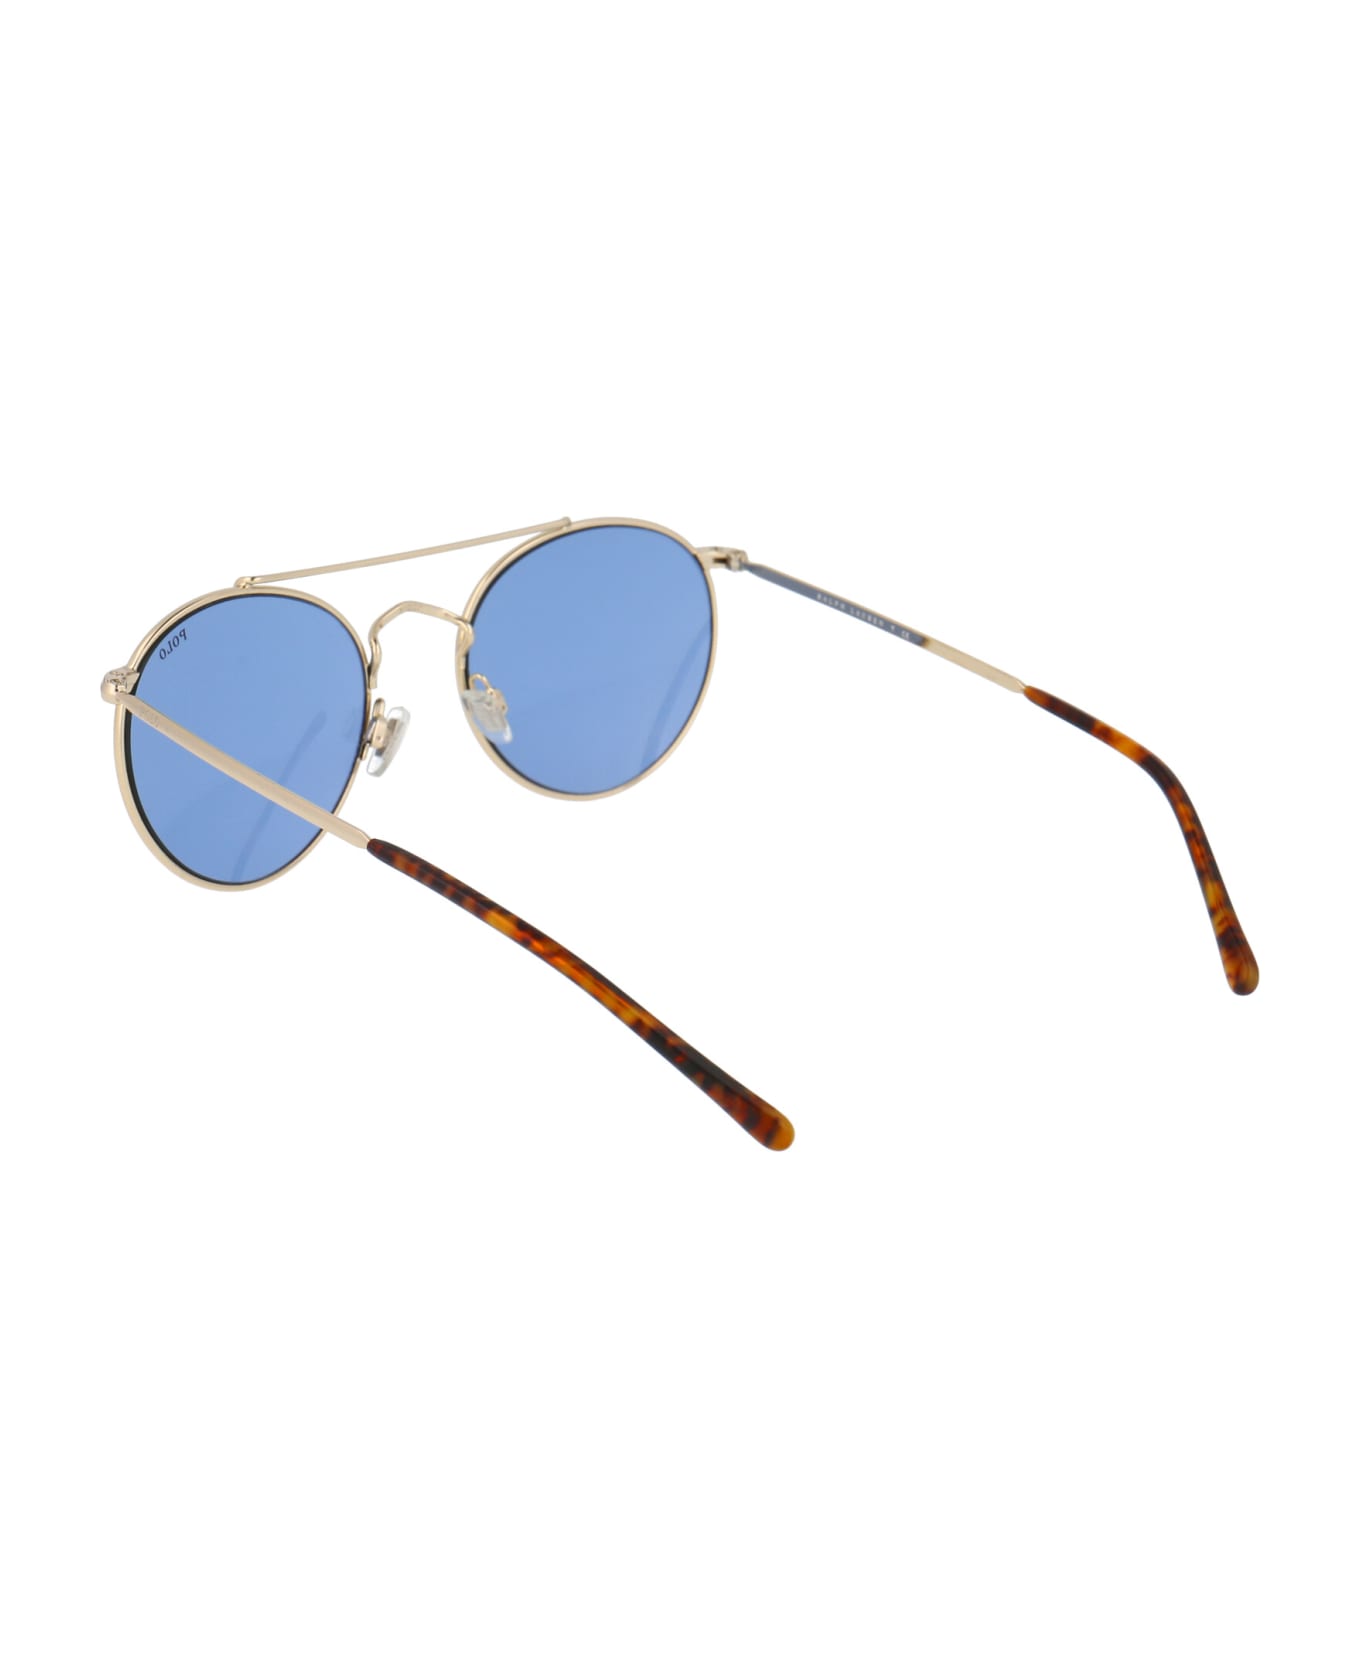 Polo Ralph Lauren 0ph3114 Sunglasses - 911672 SHINY PALE GOLD